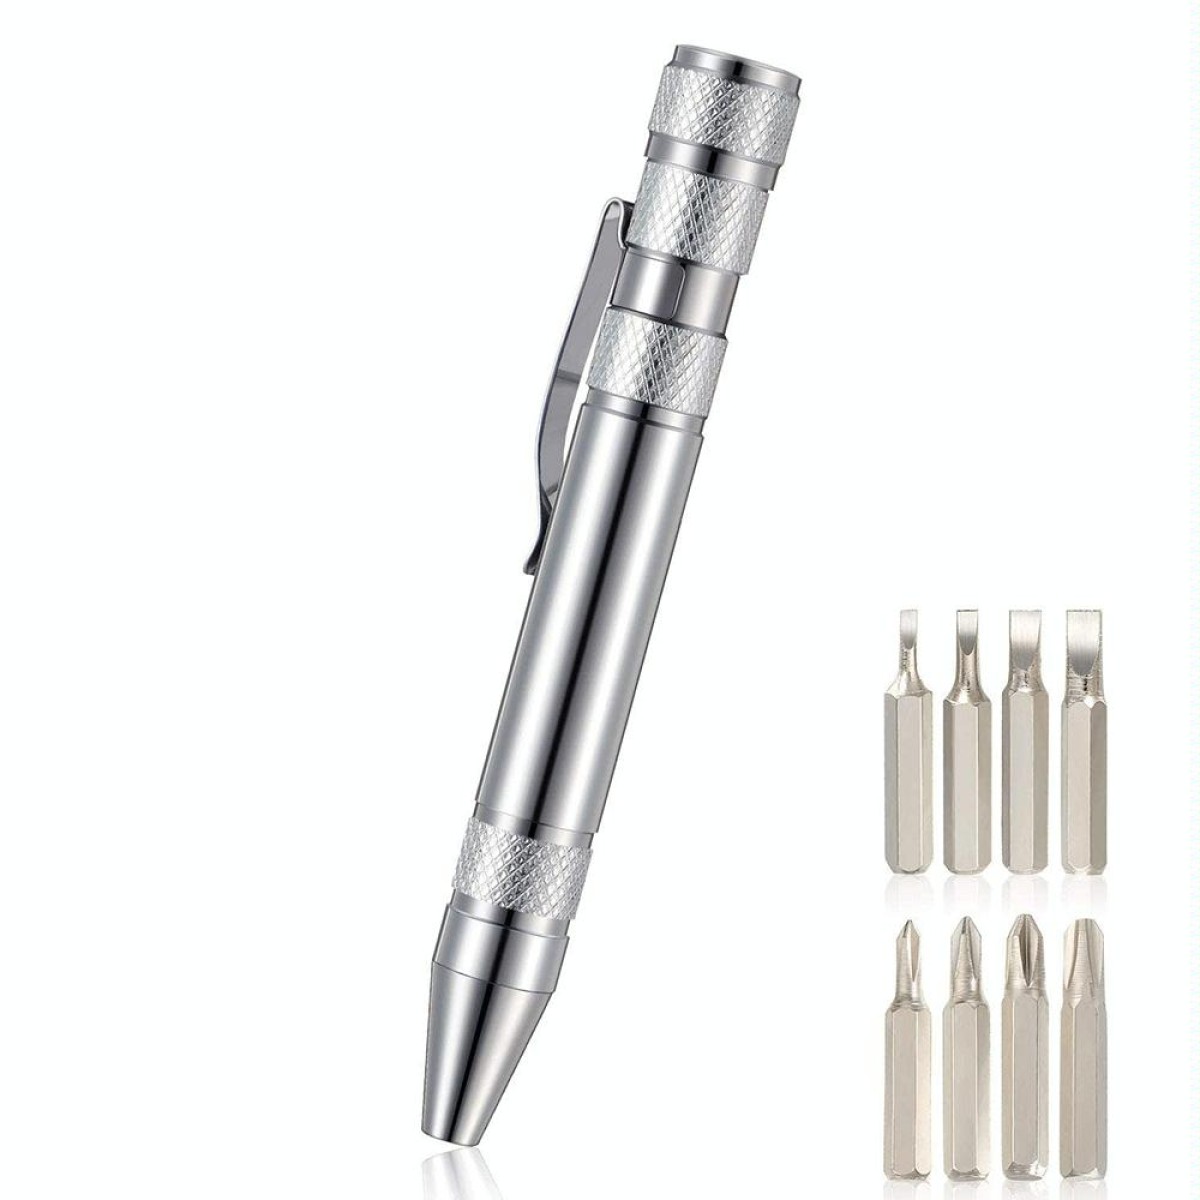 8 In 1 Multifunctional Mini Aluminum Tool Pen Screwdriver Set(Silver)